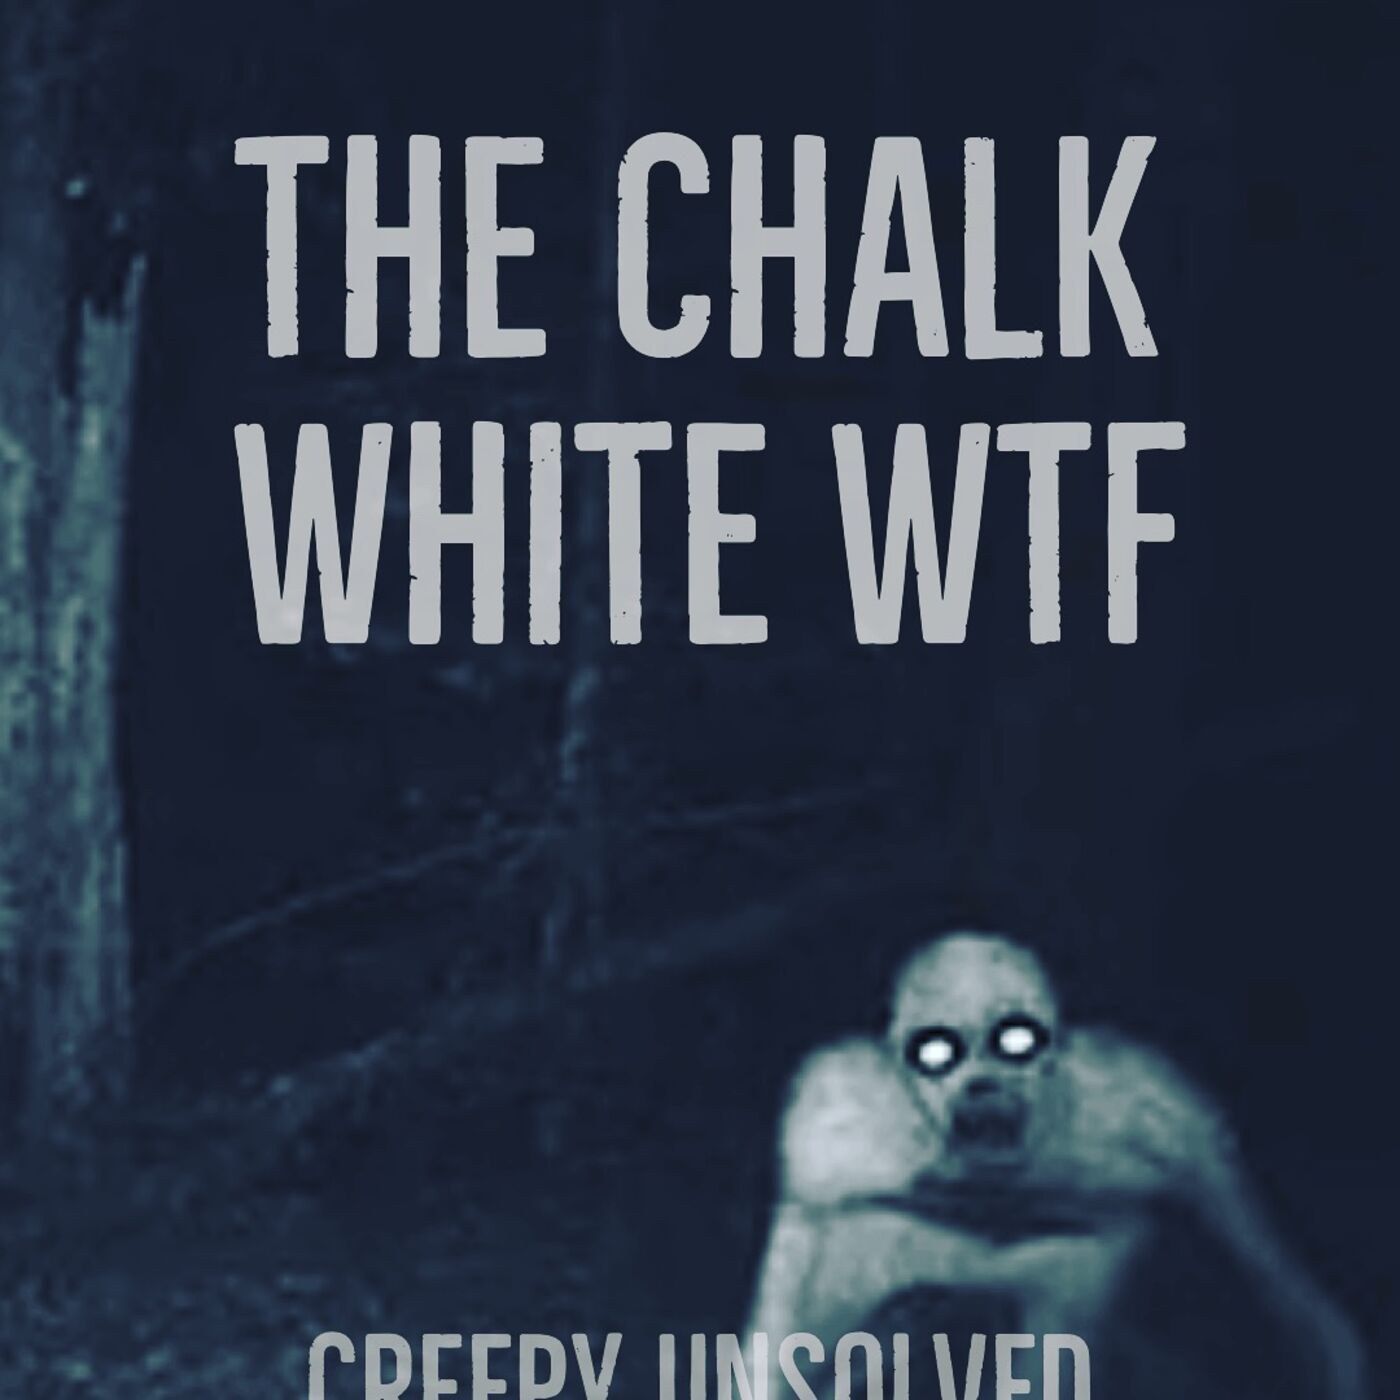 52: The Chalk White WTF